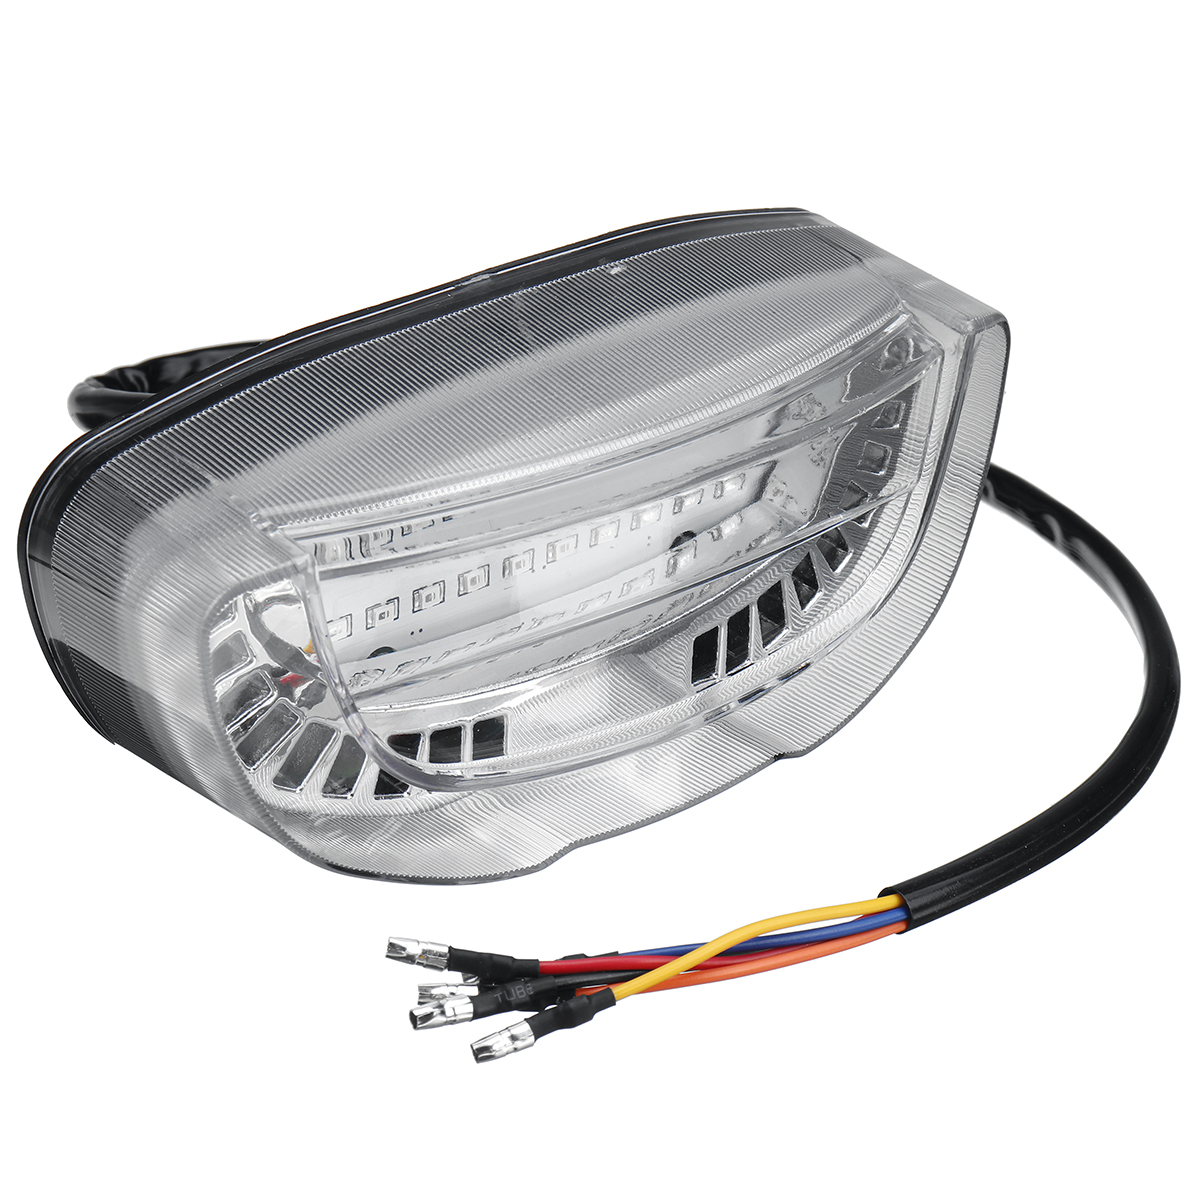 12V Motorcycle LED Tail Light Brake Rear Light Indicator Number Plate Lamp Universal - Auto GoShop